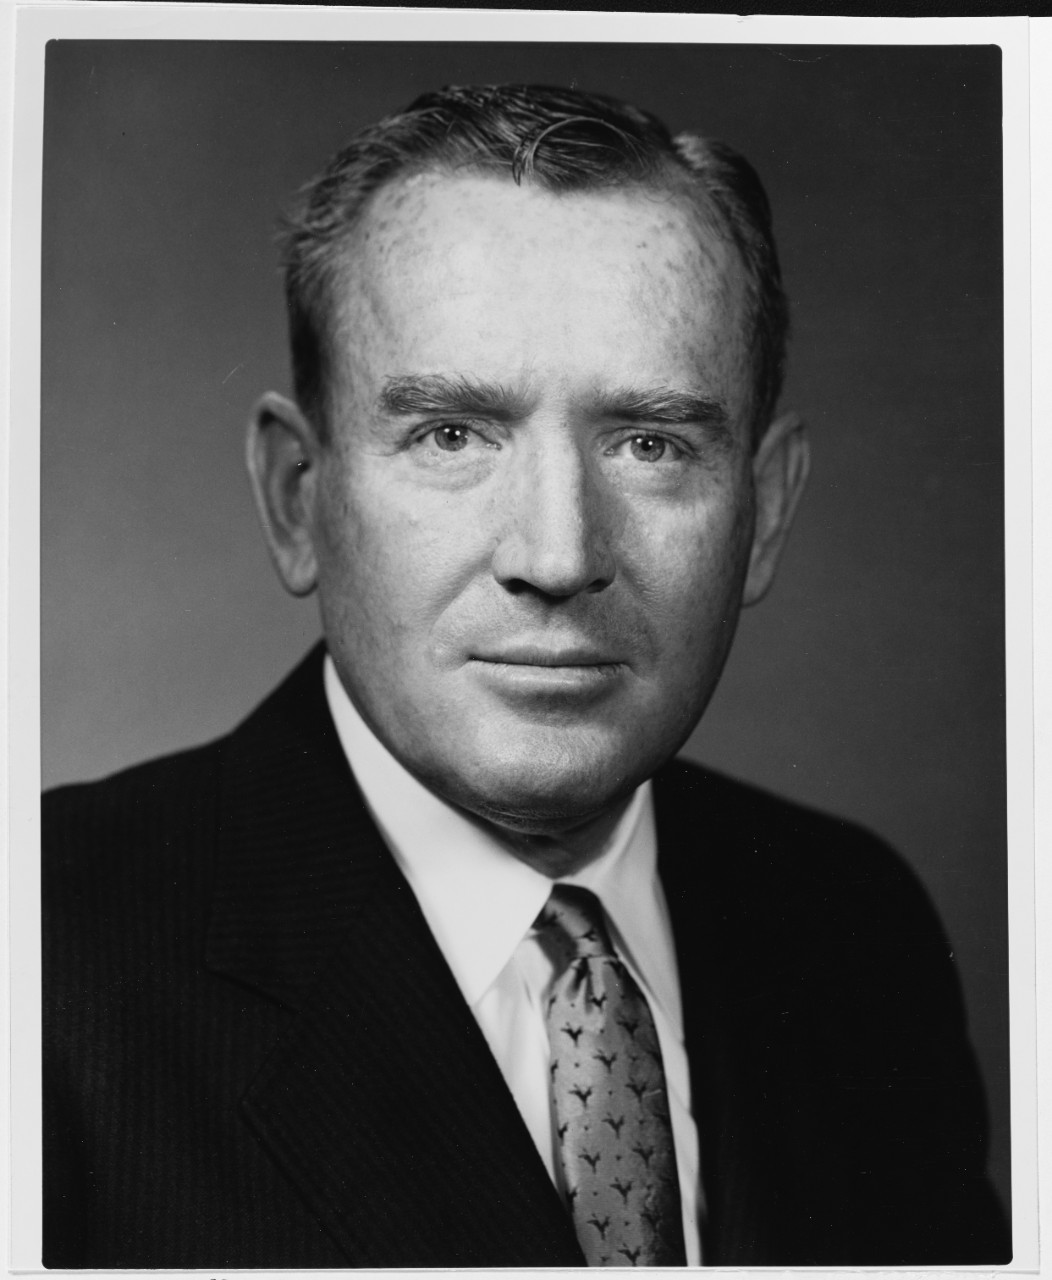 NH 96680 Paul B. Fay, Jr., Undersecretary of the Navy